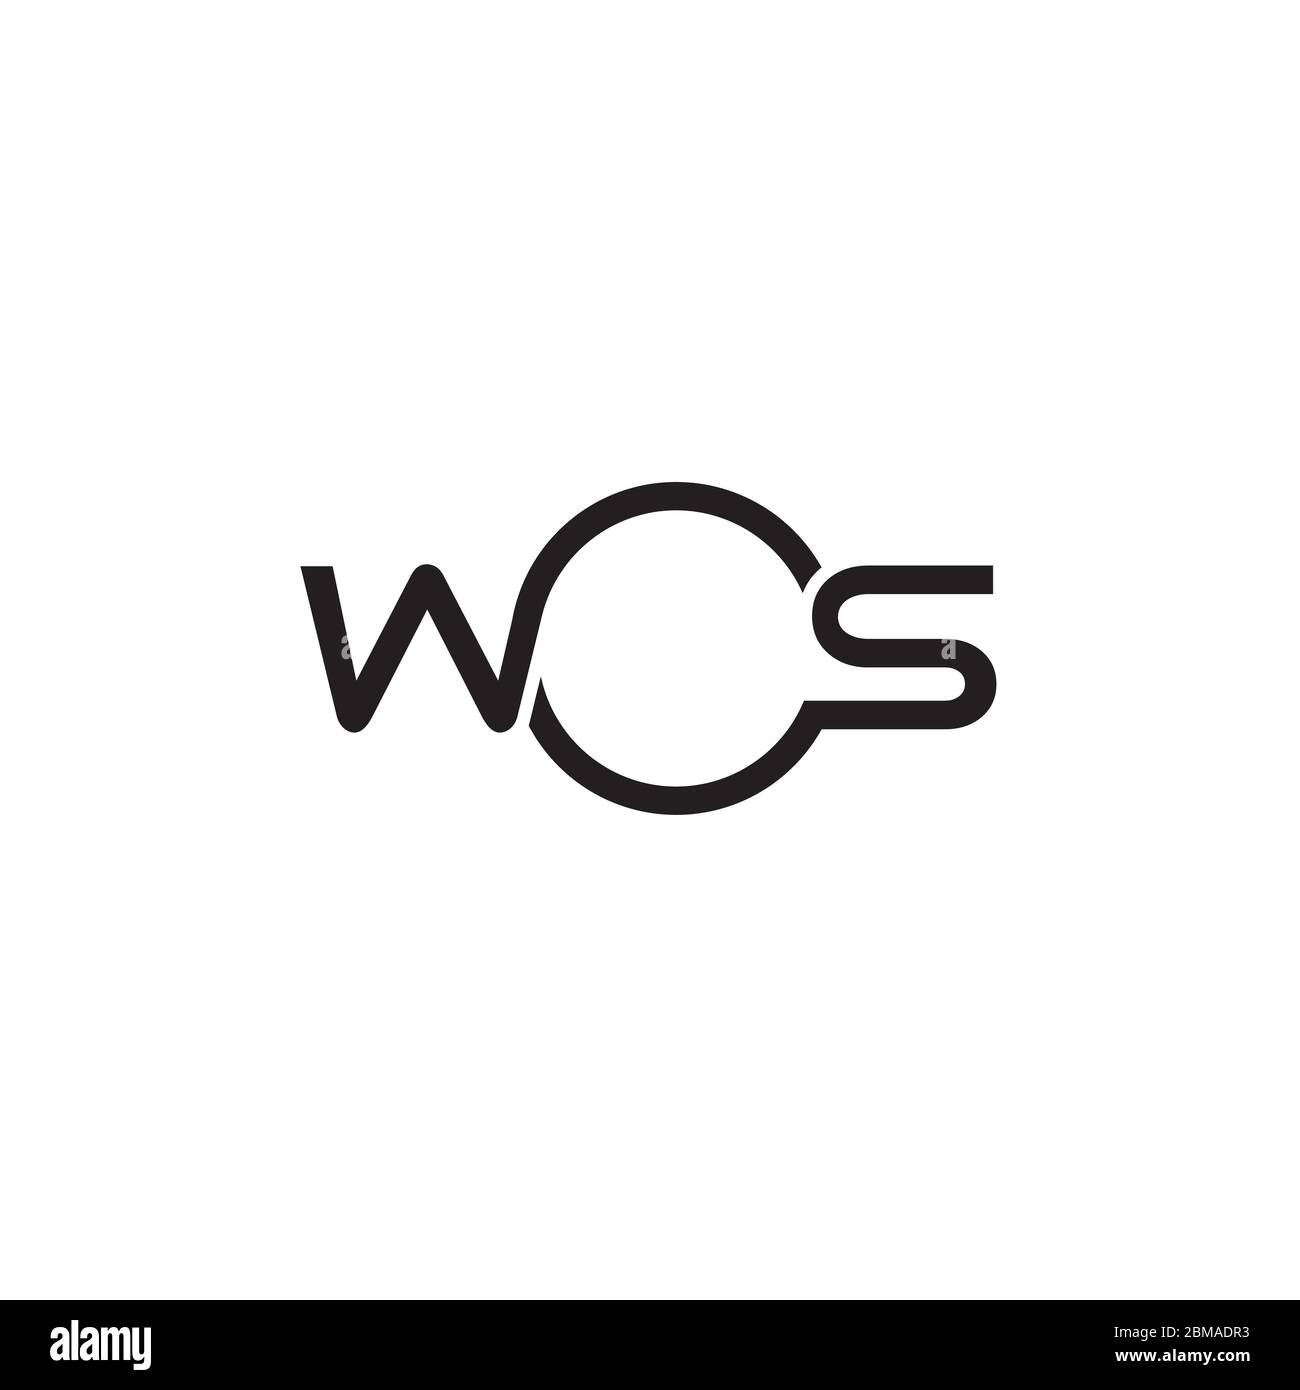 W O S /  W S letter logo design vector Stock Vector